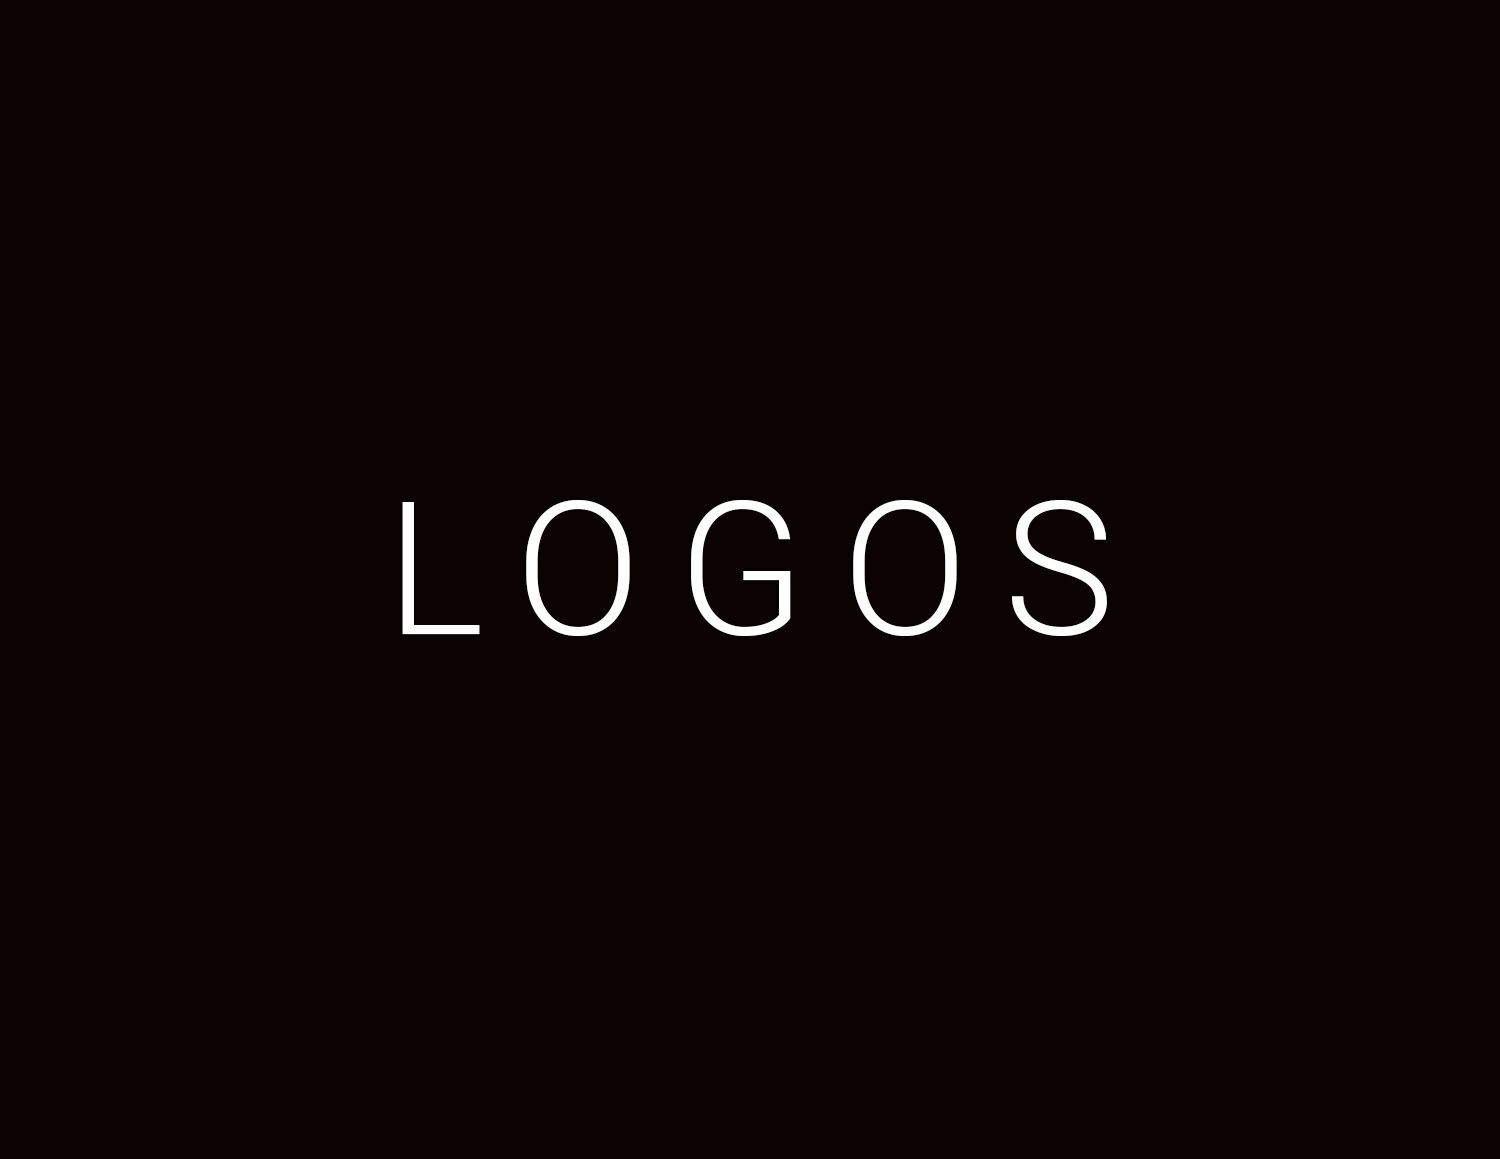 logos_1.jpg